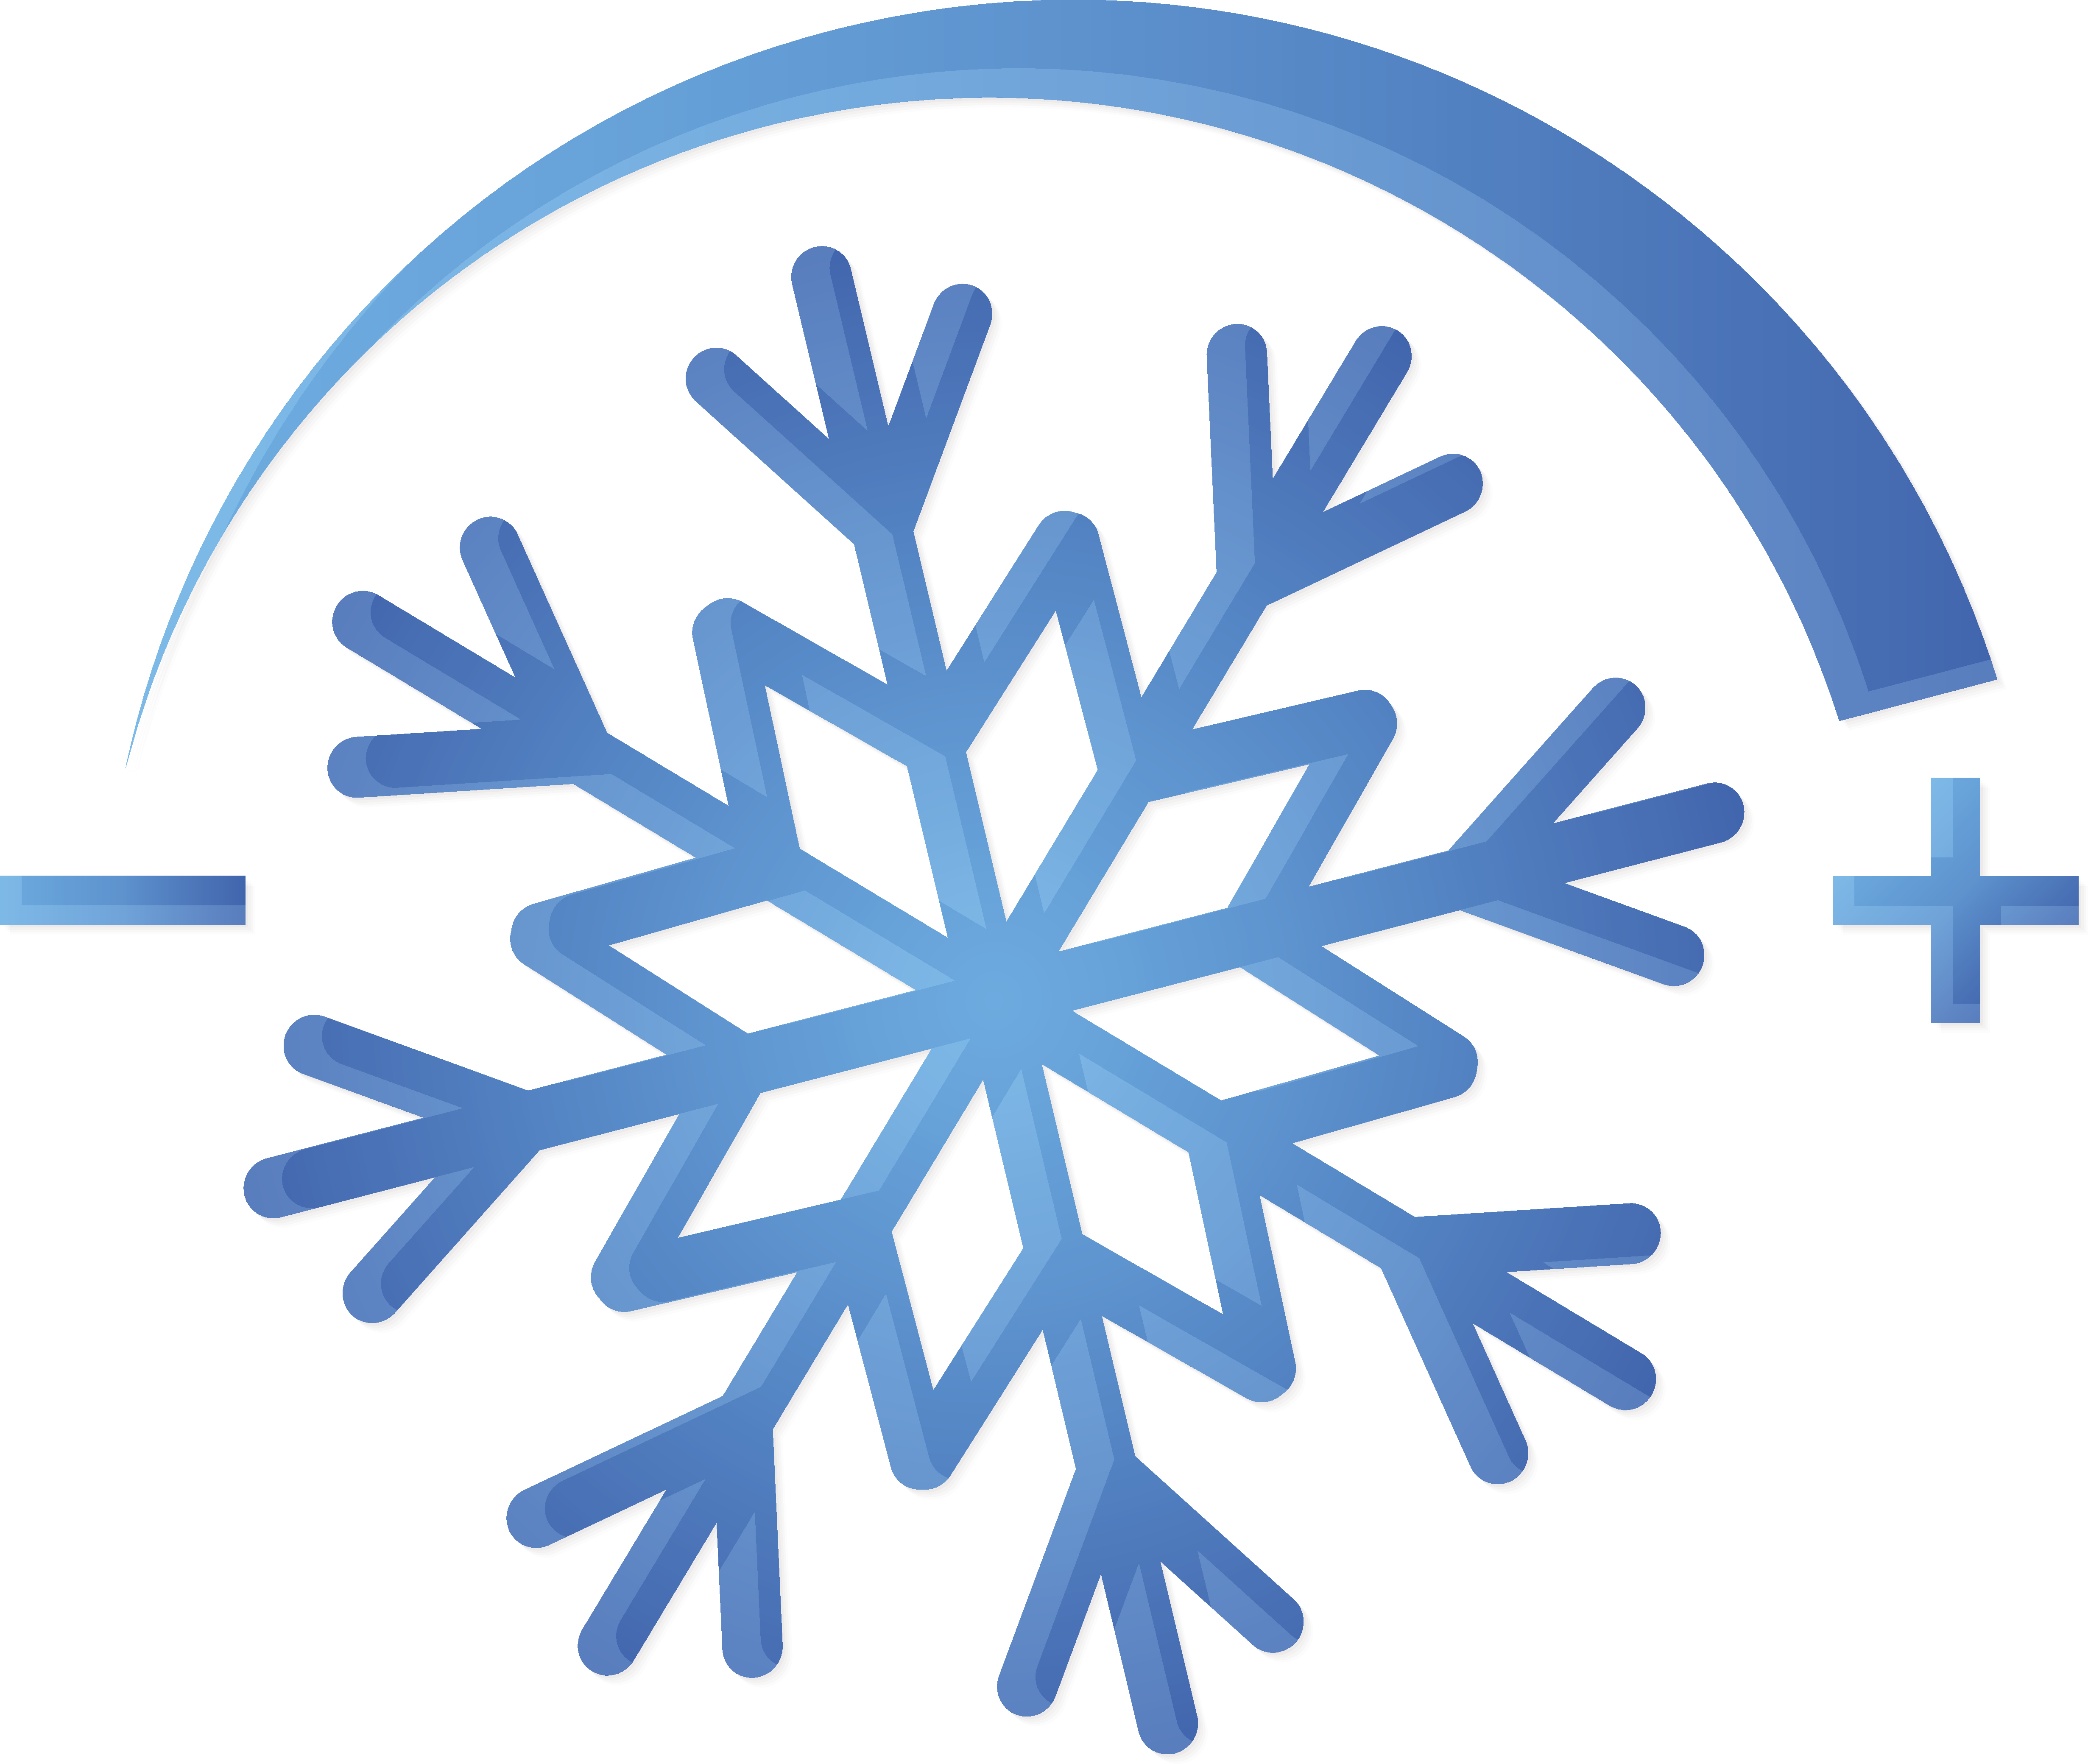 Air conditioner symbol snowflake for vector